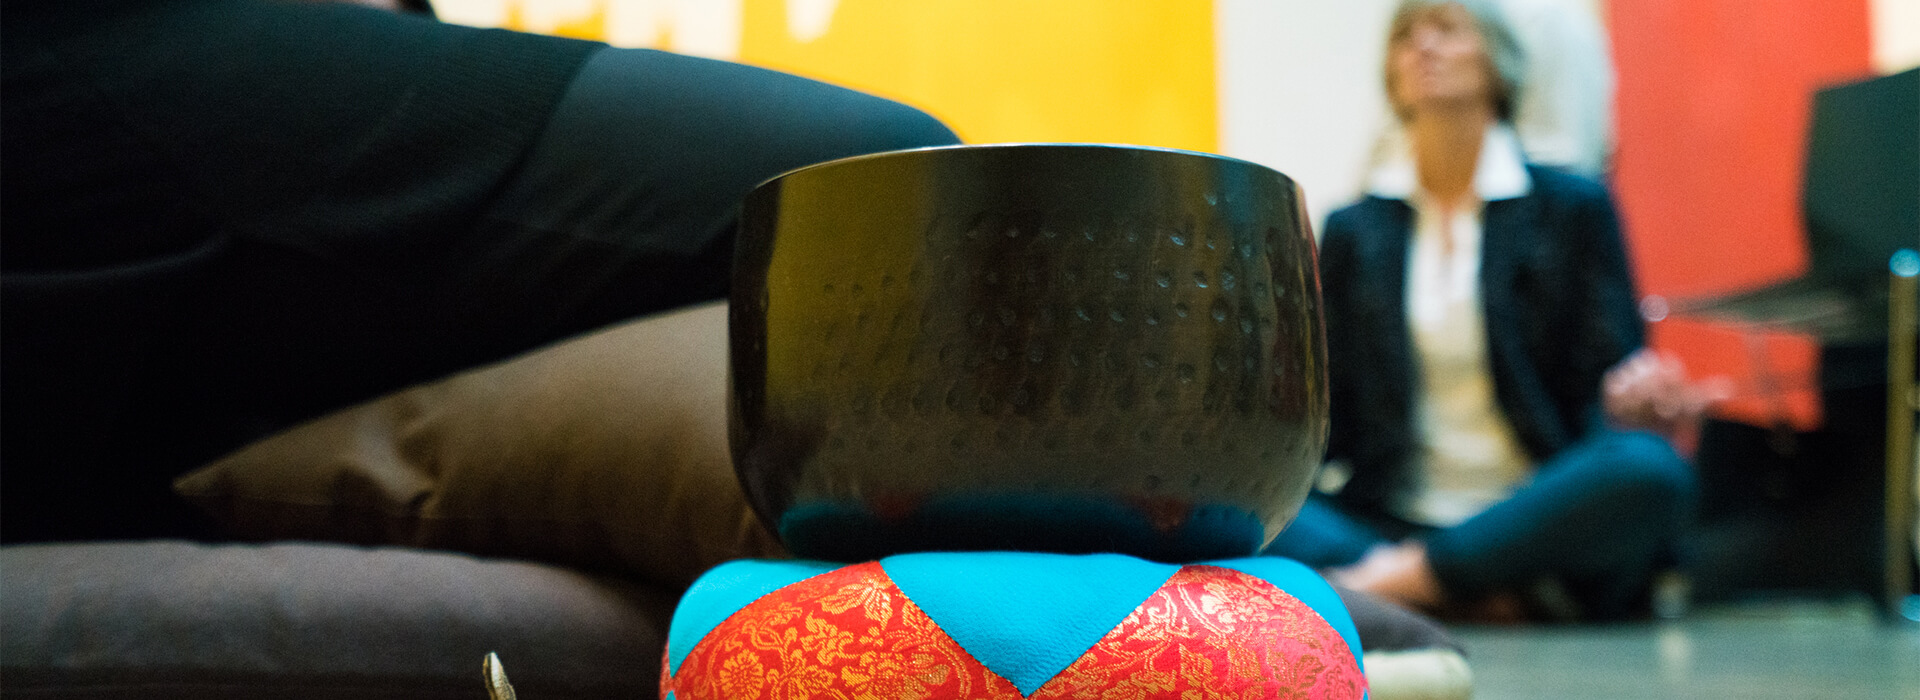 Closeup of a meditation bowl in an art gallery